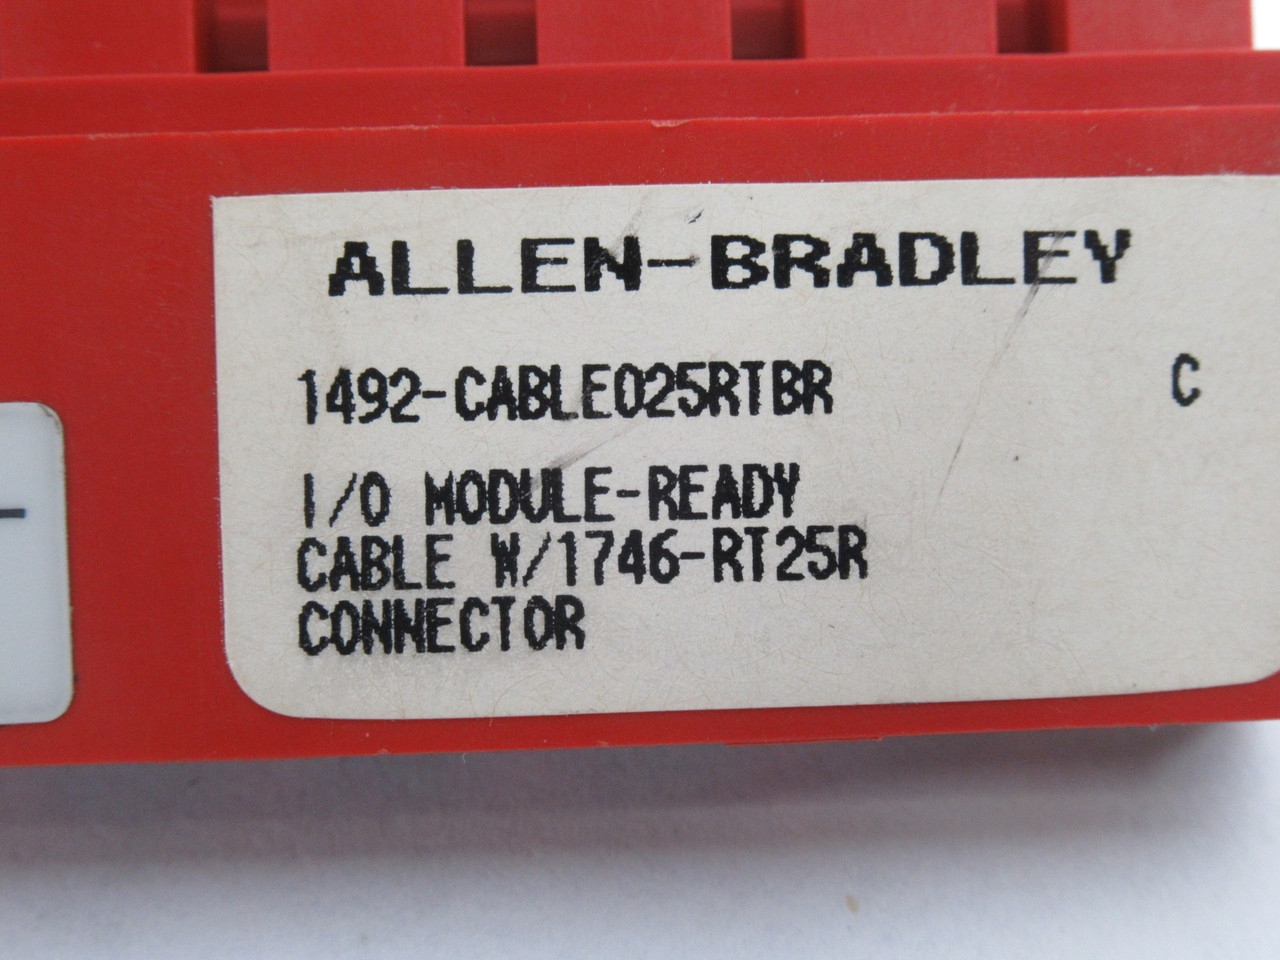 Allen-Bradley 1746-RT25R Terminal Block Connector *Missing Screw & Pin* USED